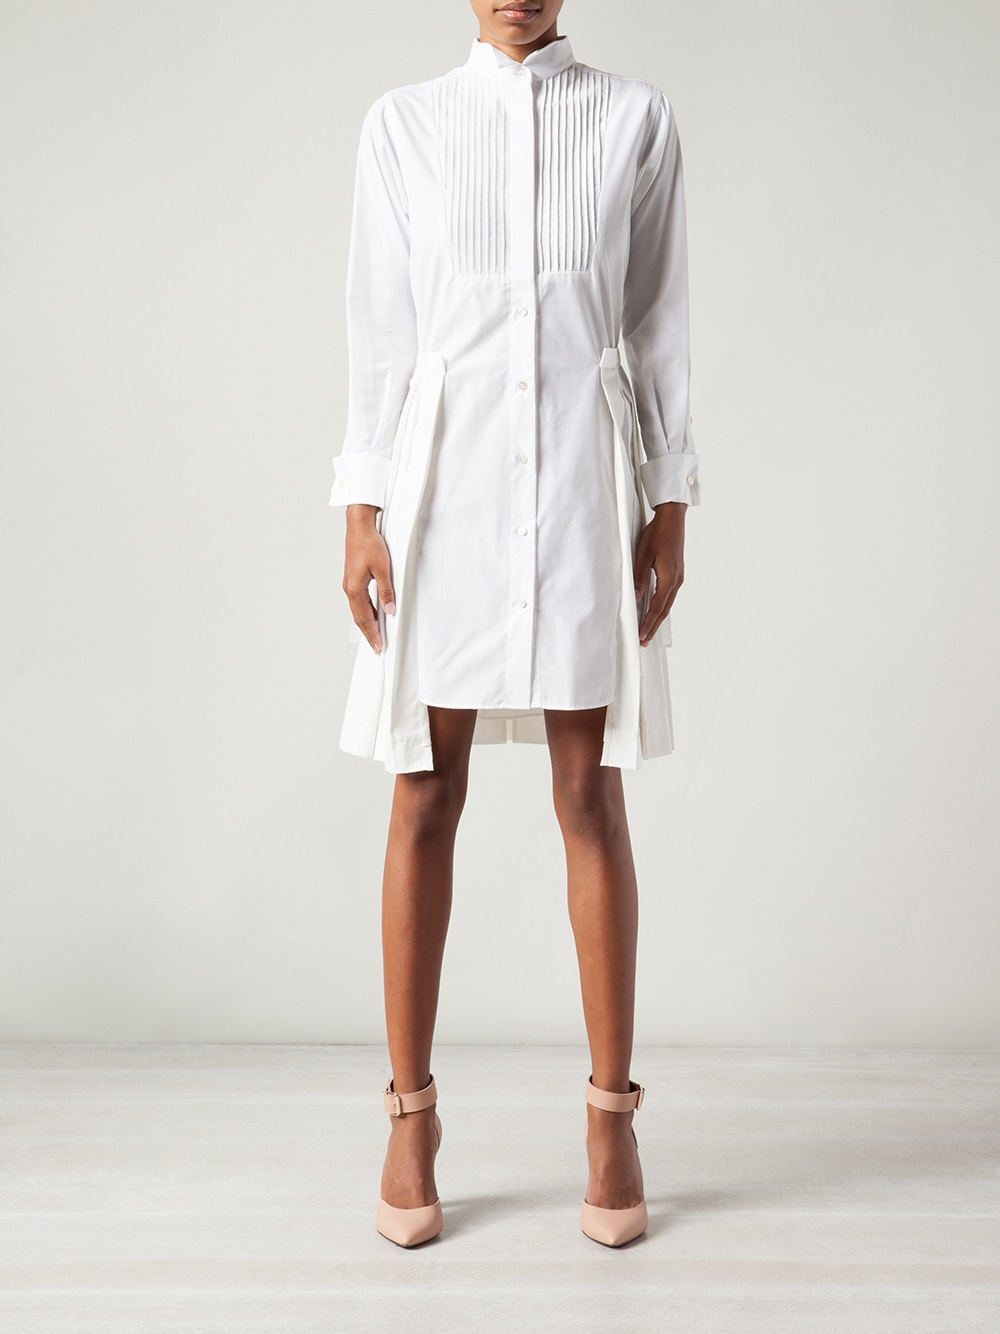 Lyst - Sacai Poplin Shirt Dress in White